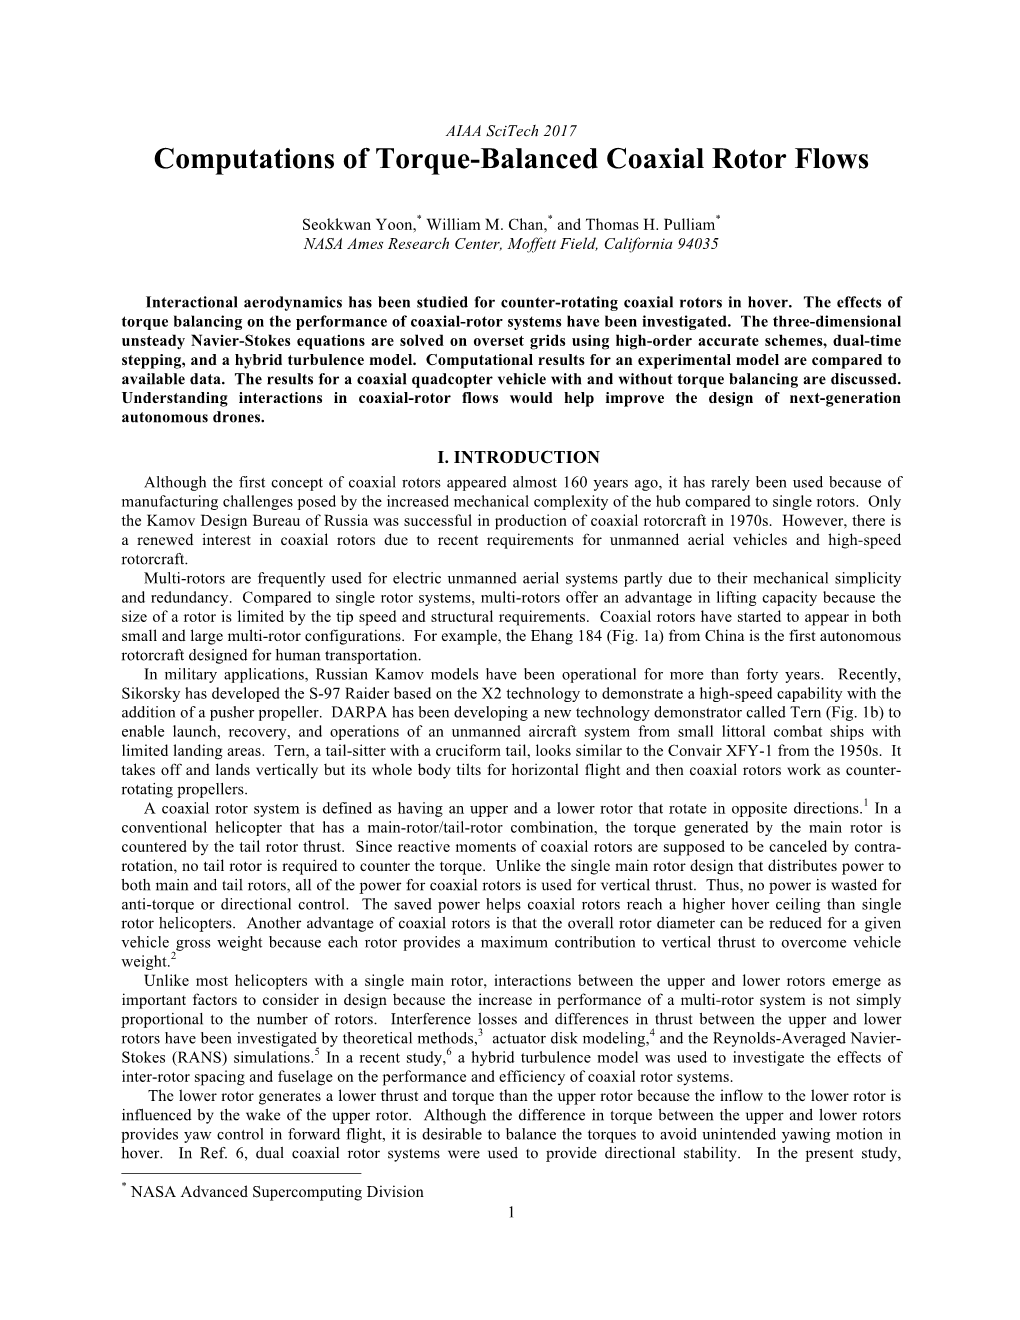 Computations of Torque-Balanced Coaxial Rotor Flows